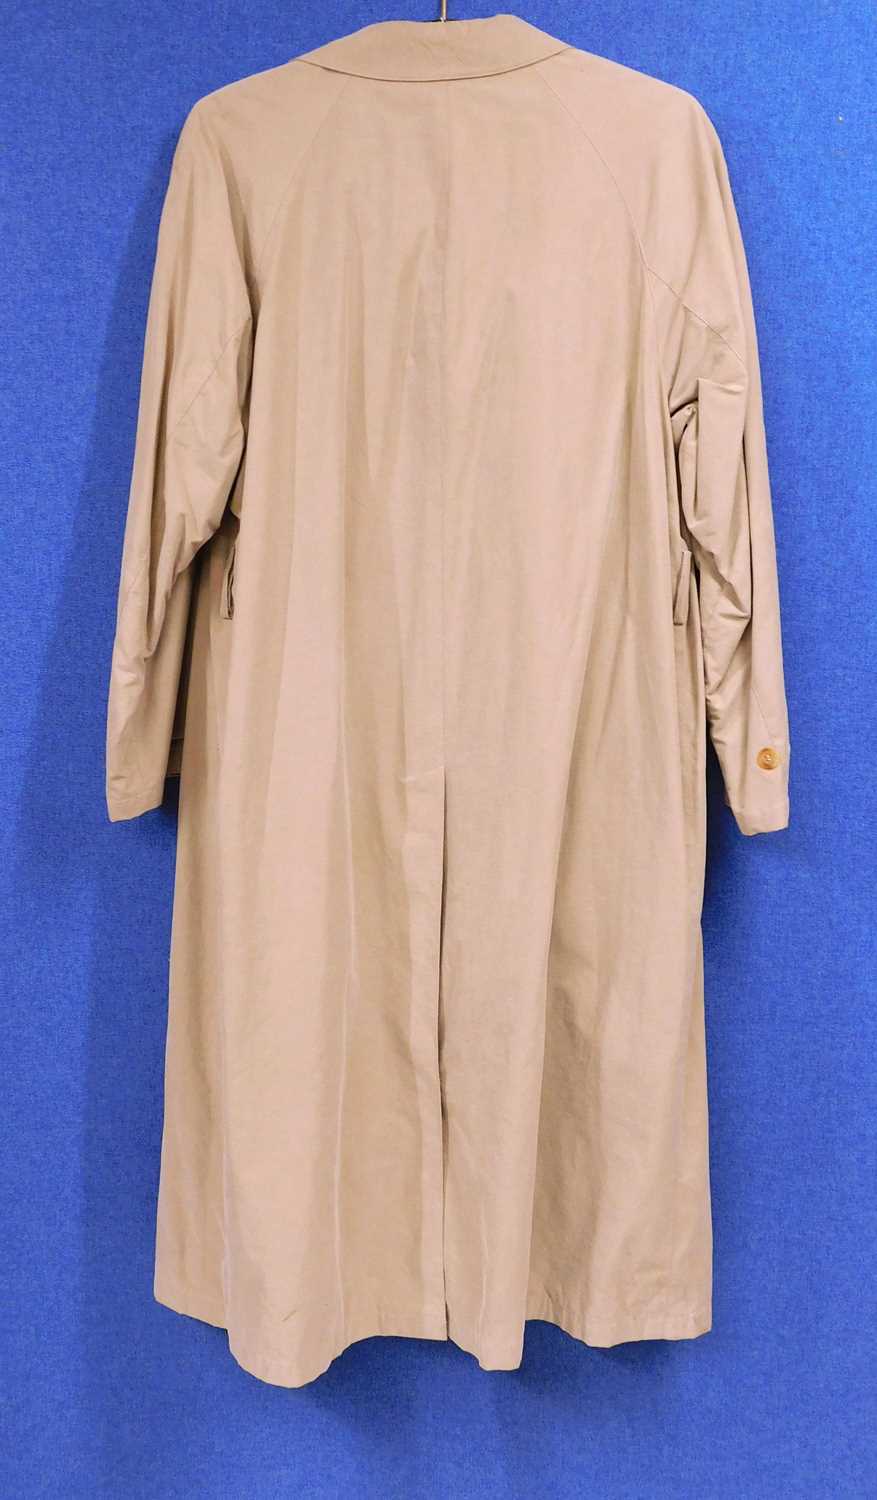 A gentleman's Aquascutum single breasted raincoat, size 40 Reg - Image 2 of 3